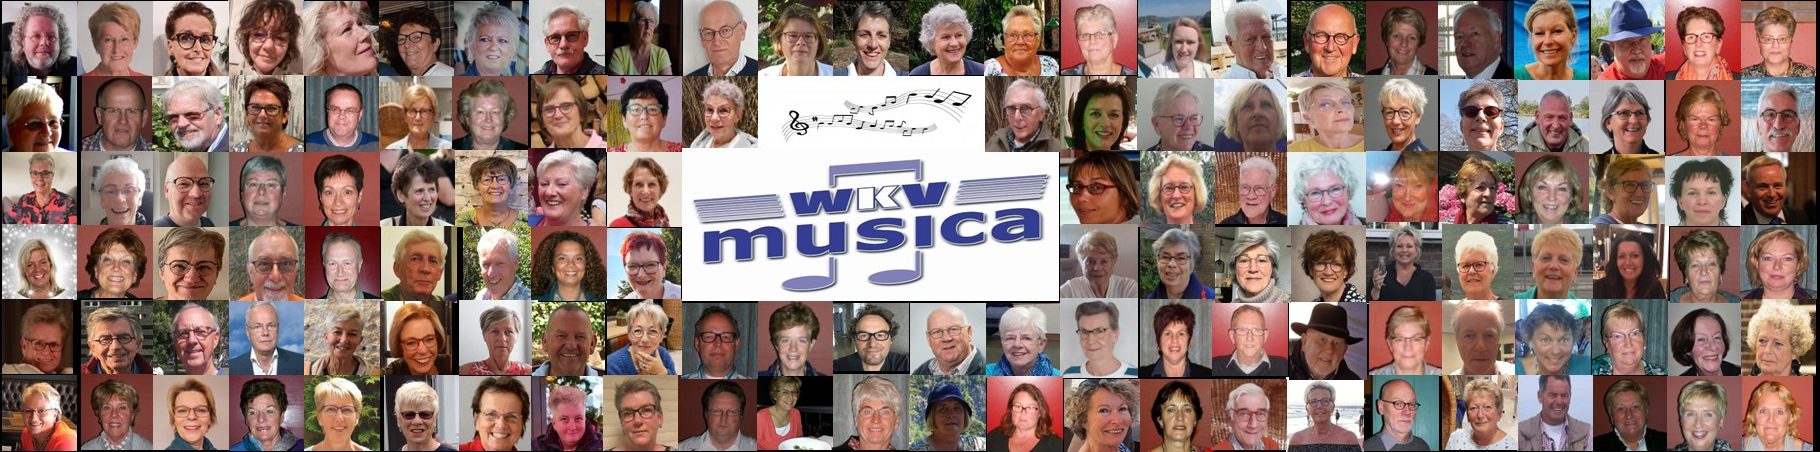 Westlandse Koorvereniging Musica